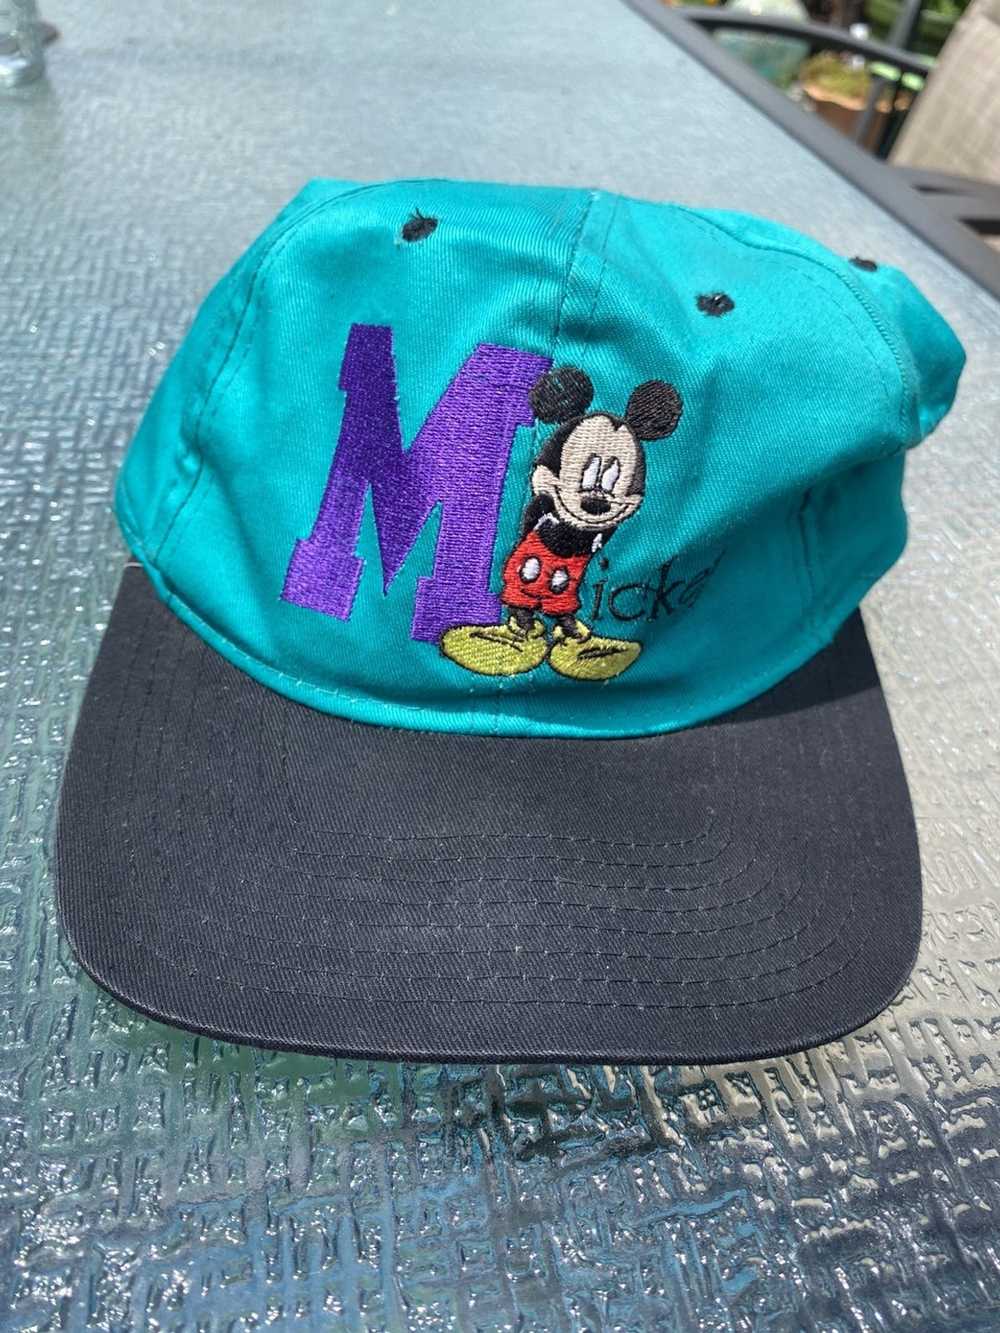 Disney Vintage mickey mouse snapback hat - image 1